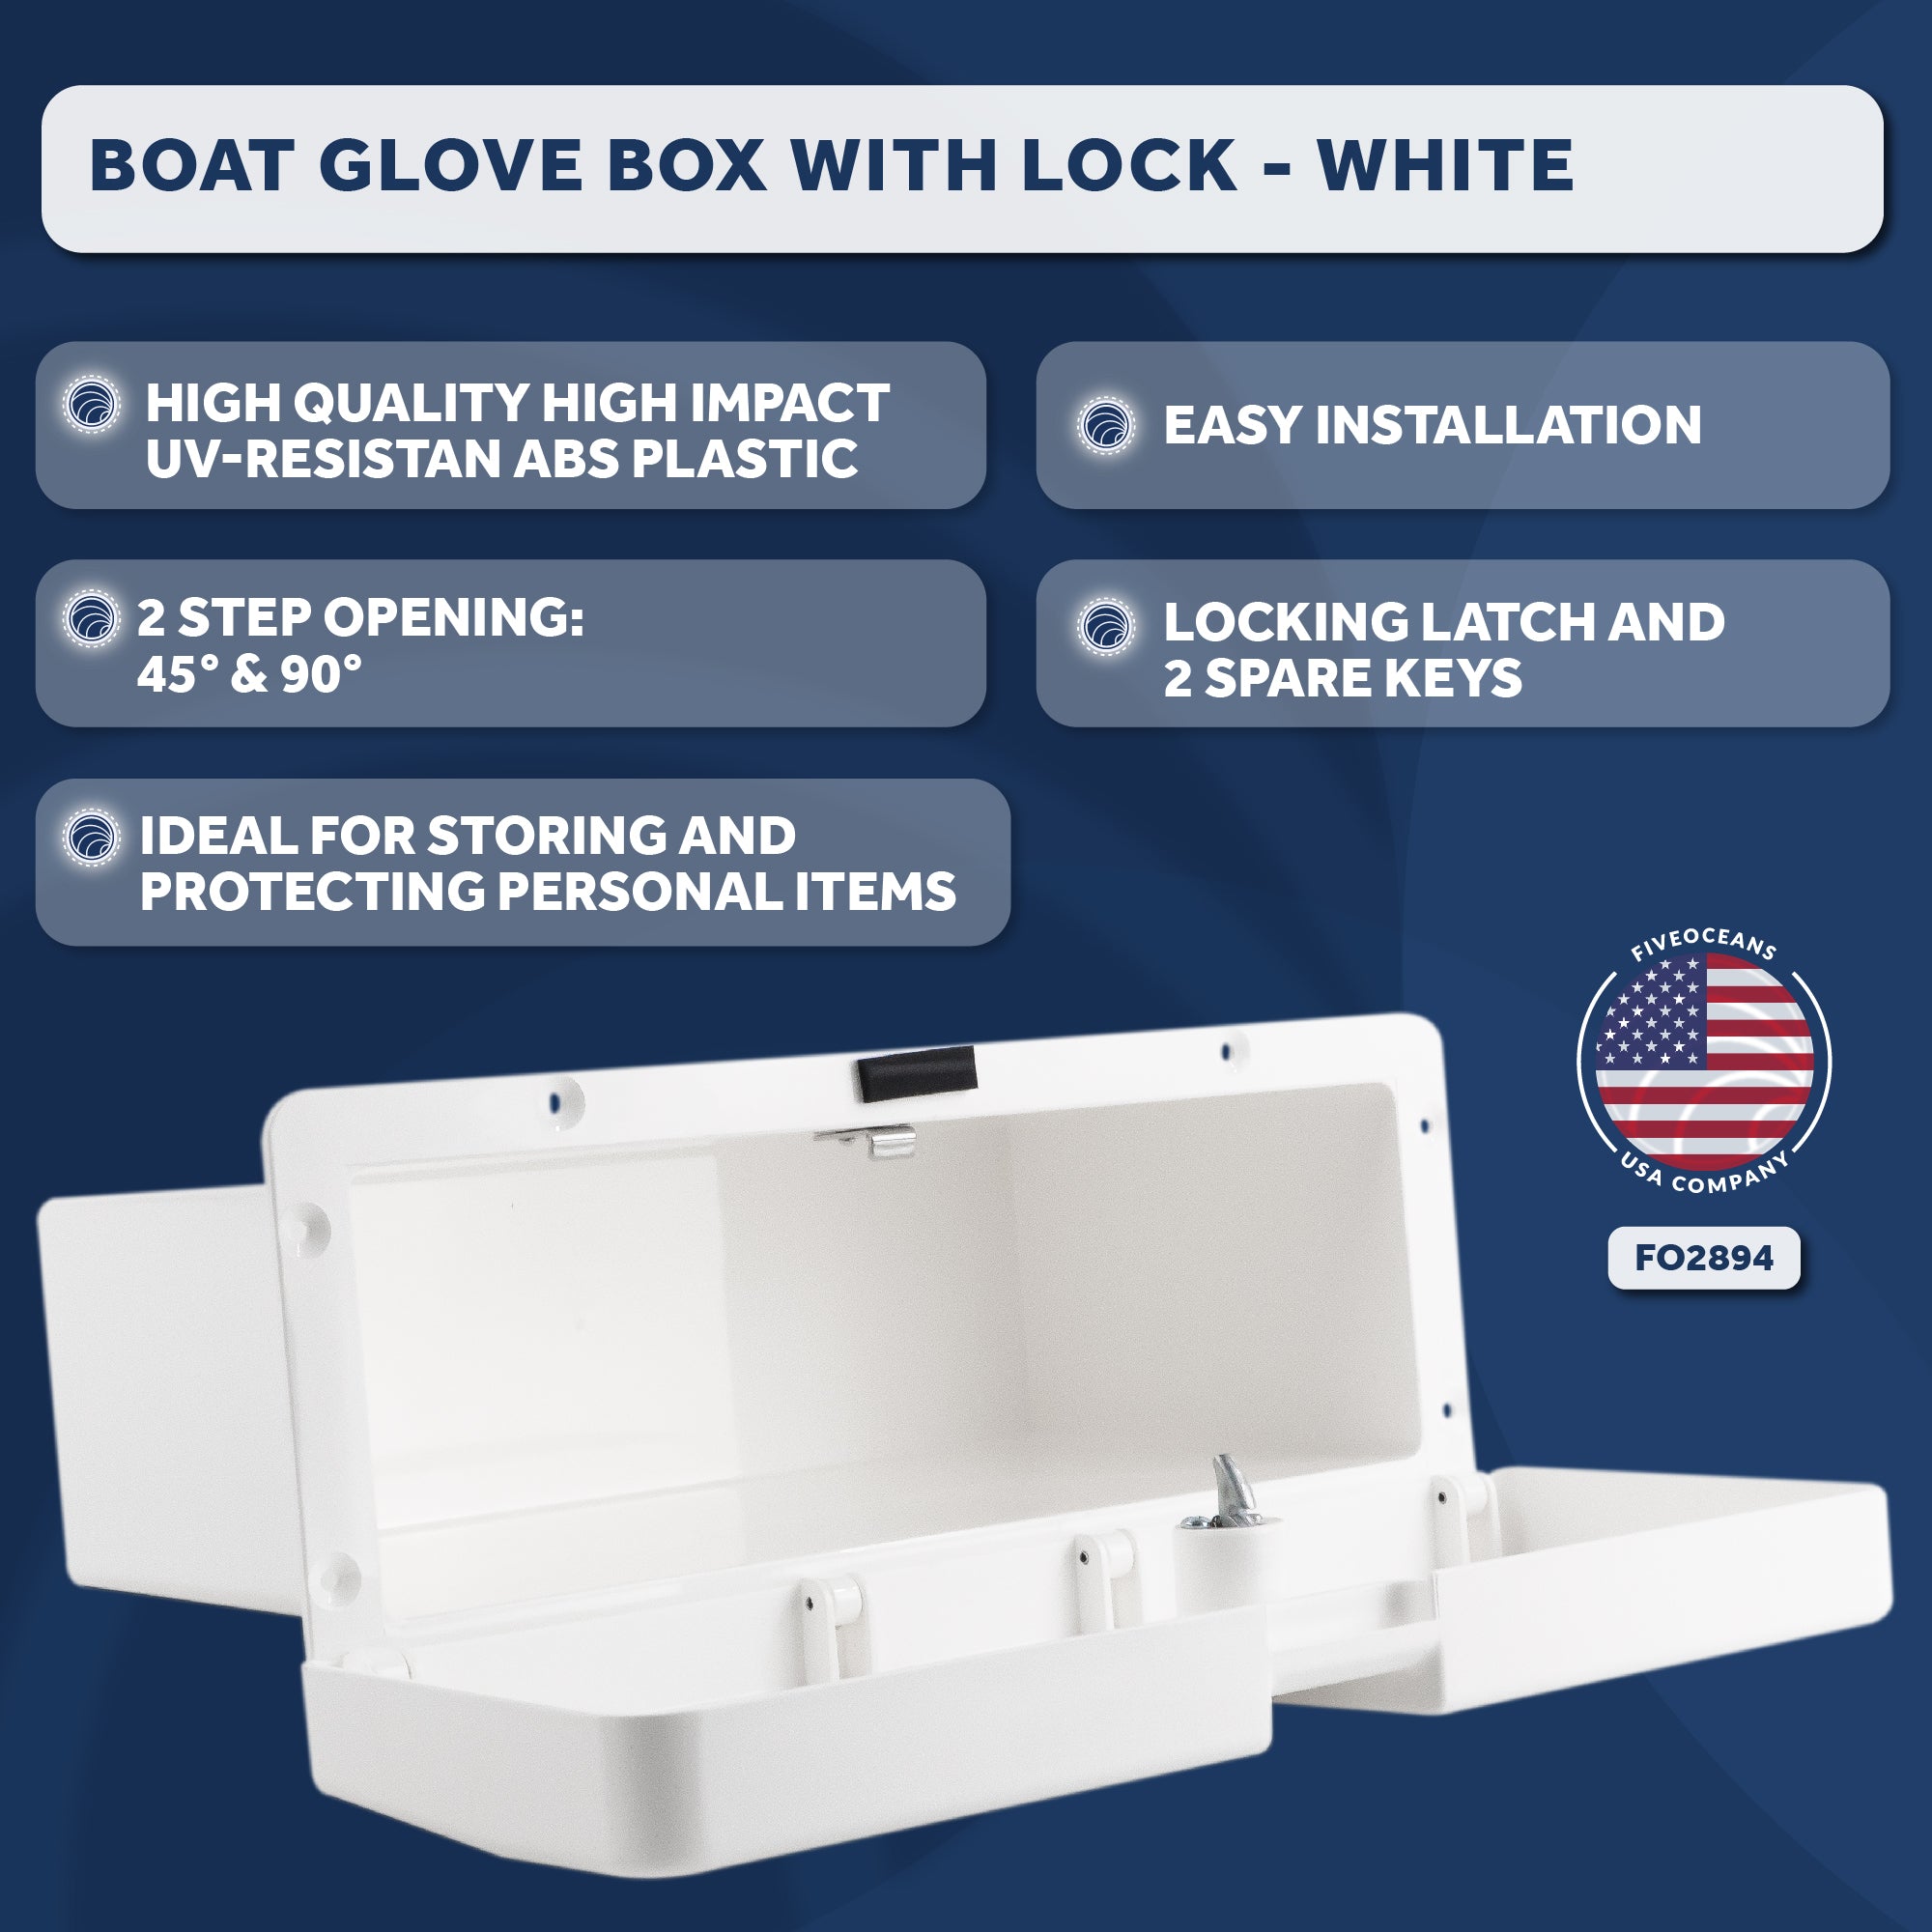 Boat Glove Box with Lock, White - FO2894